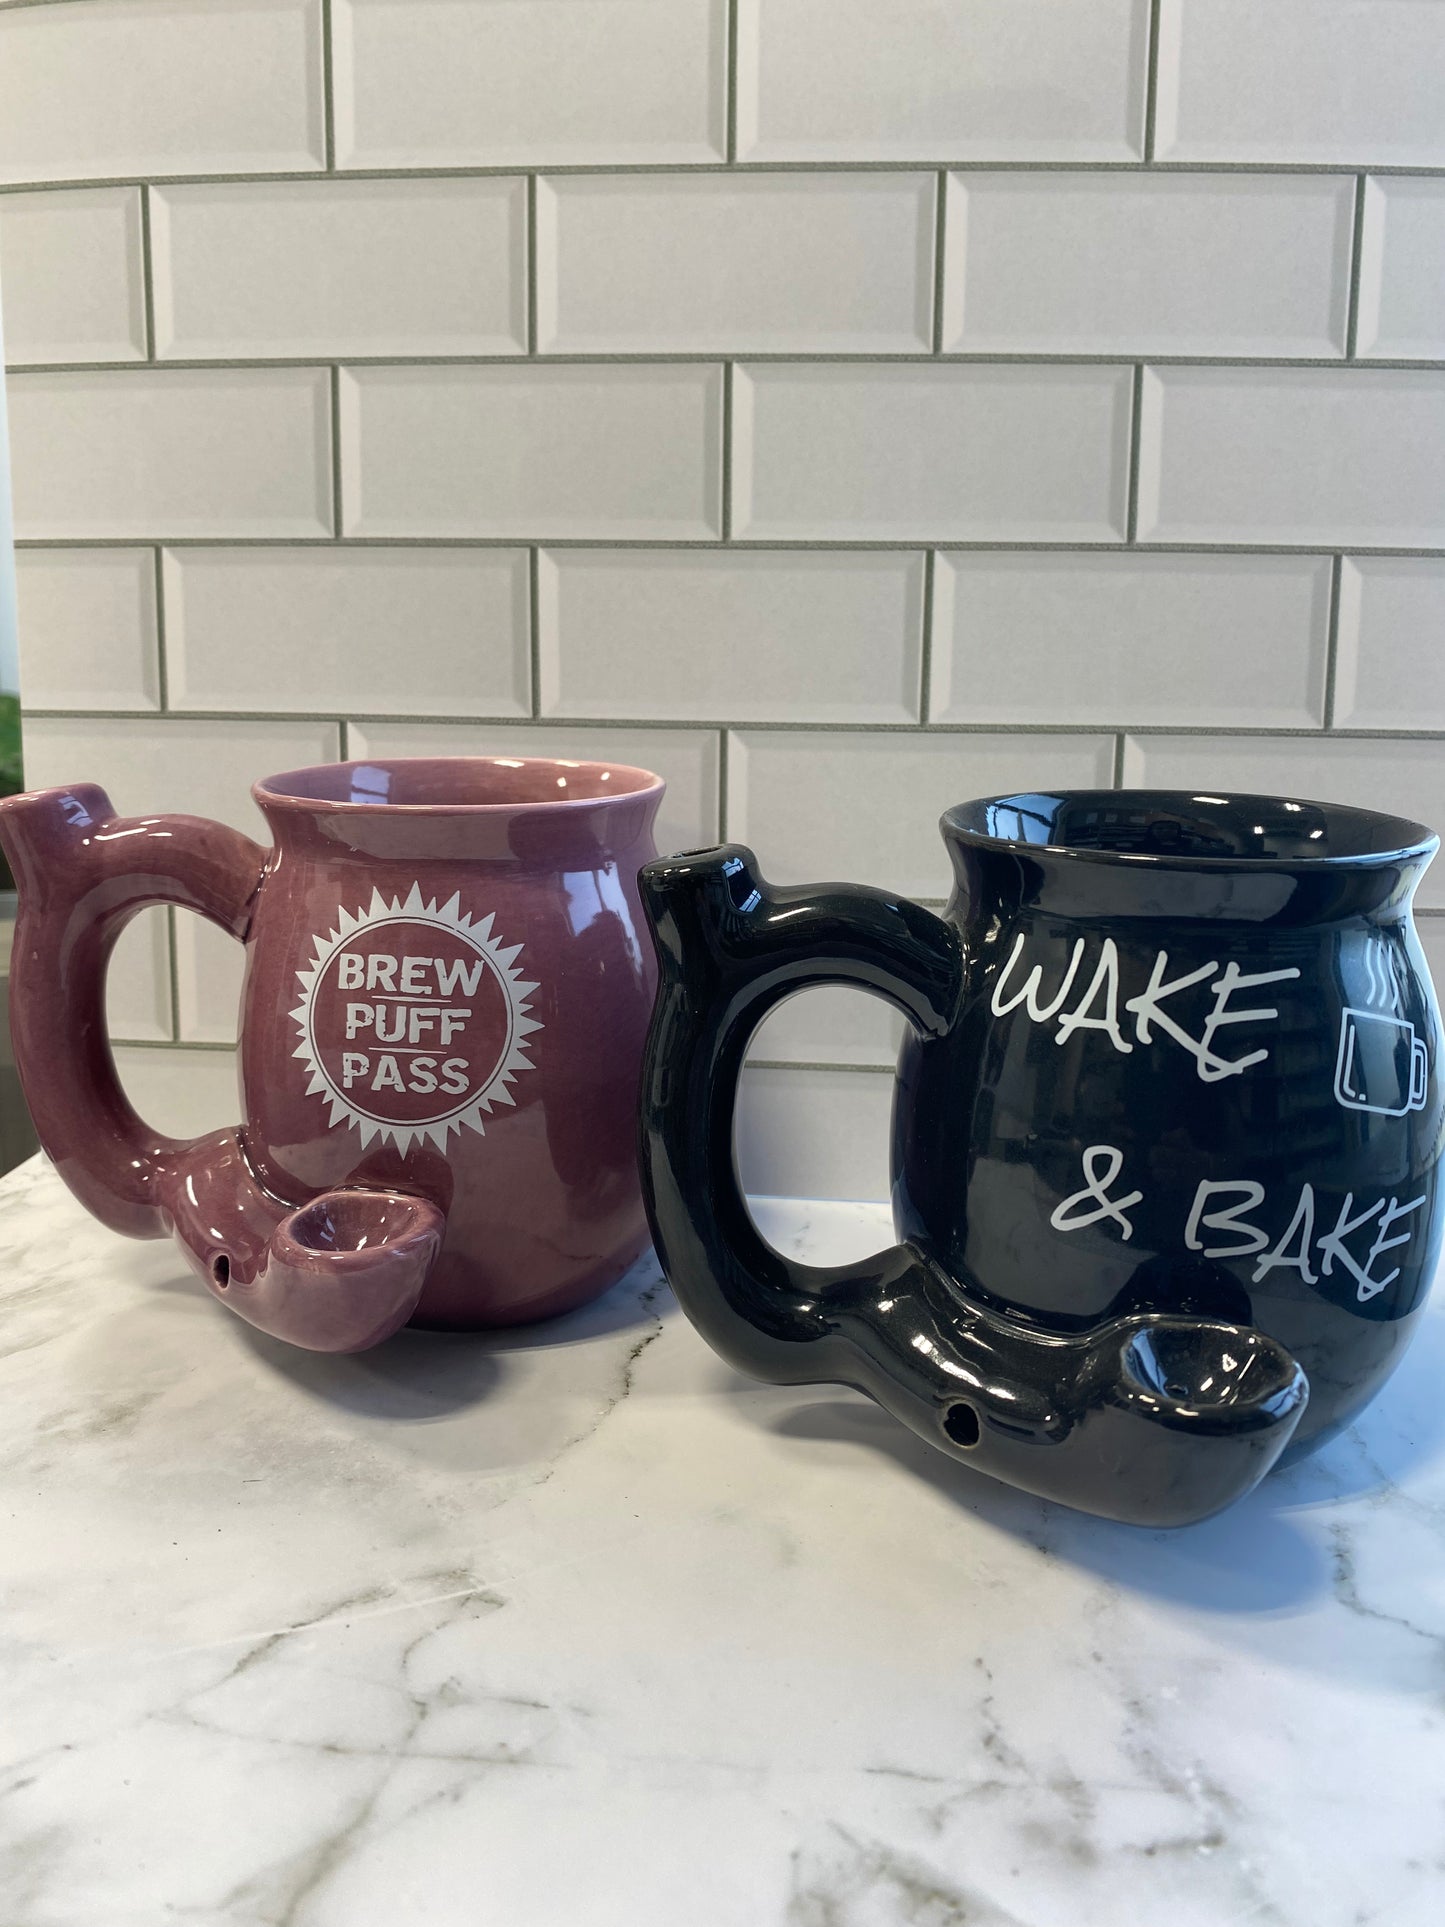 Wake and bake black ceramic mug pipe